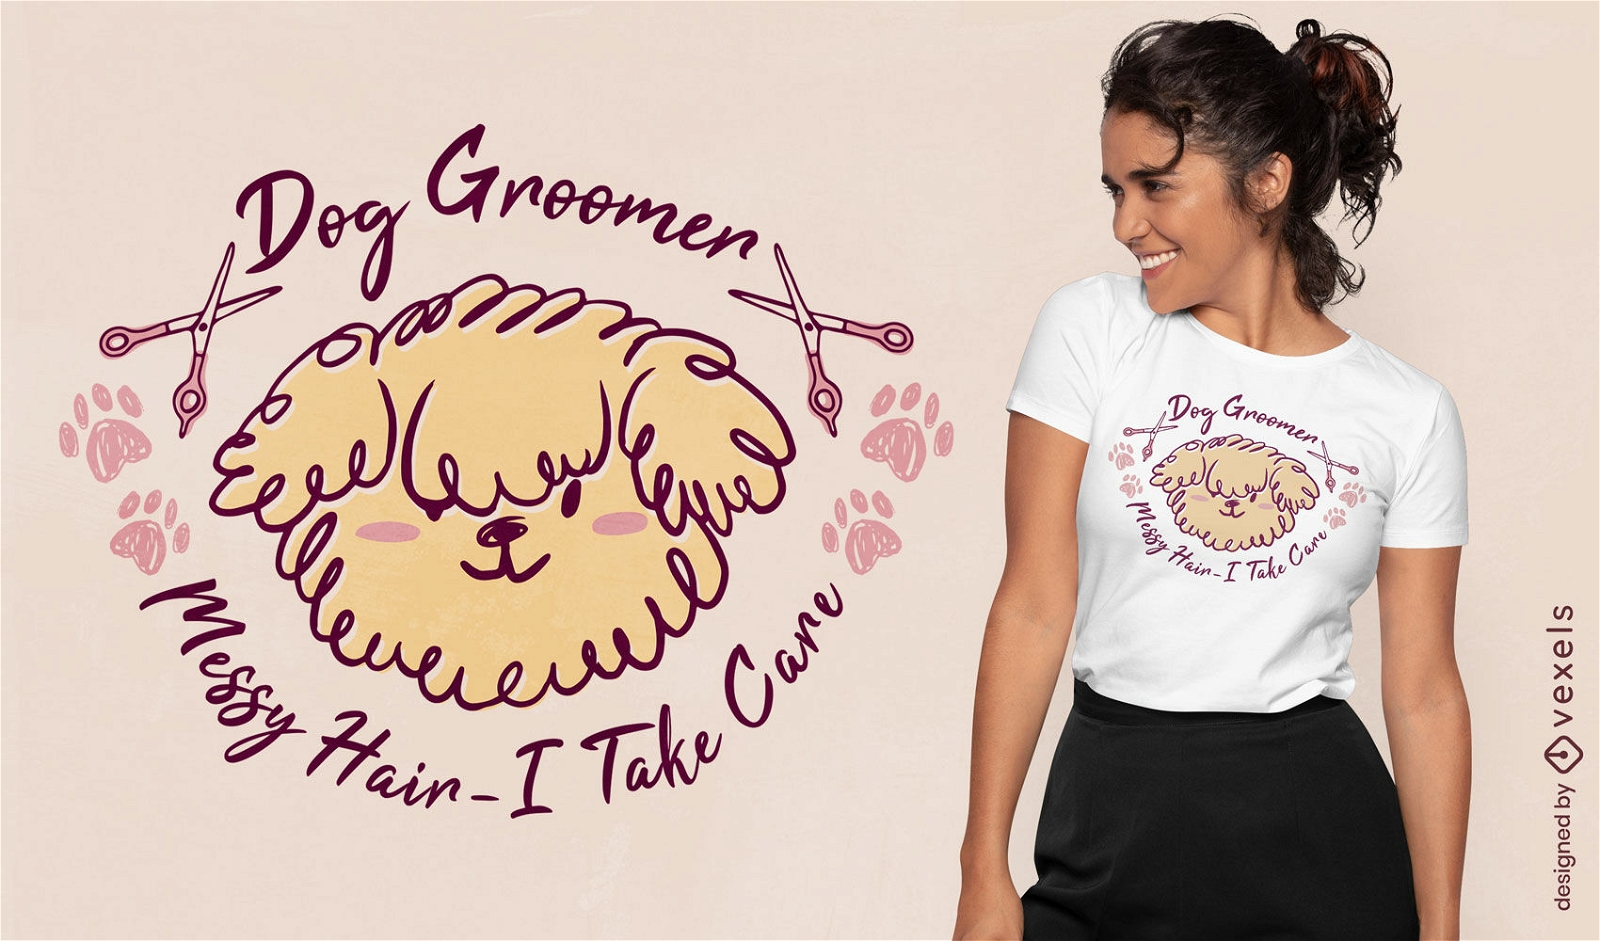 Dog groomer hair t-shirt design